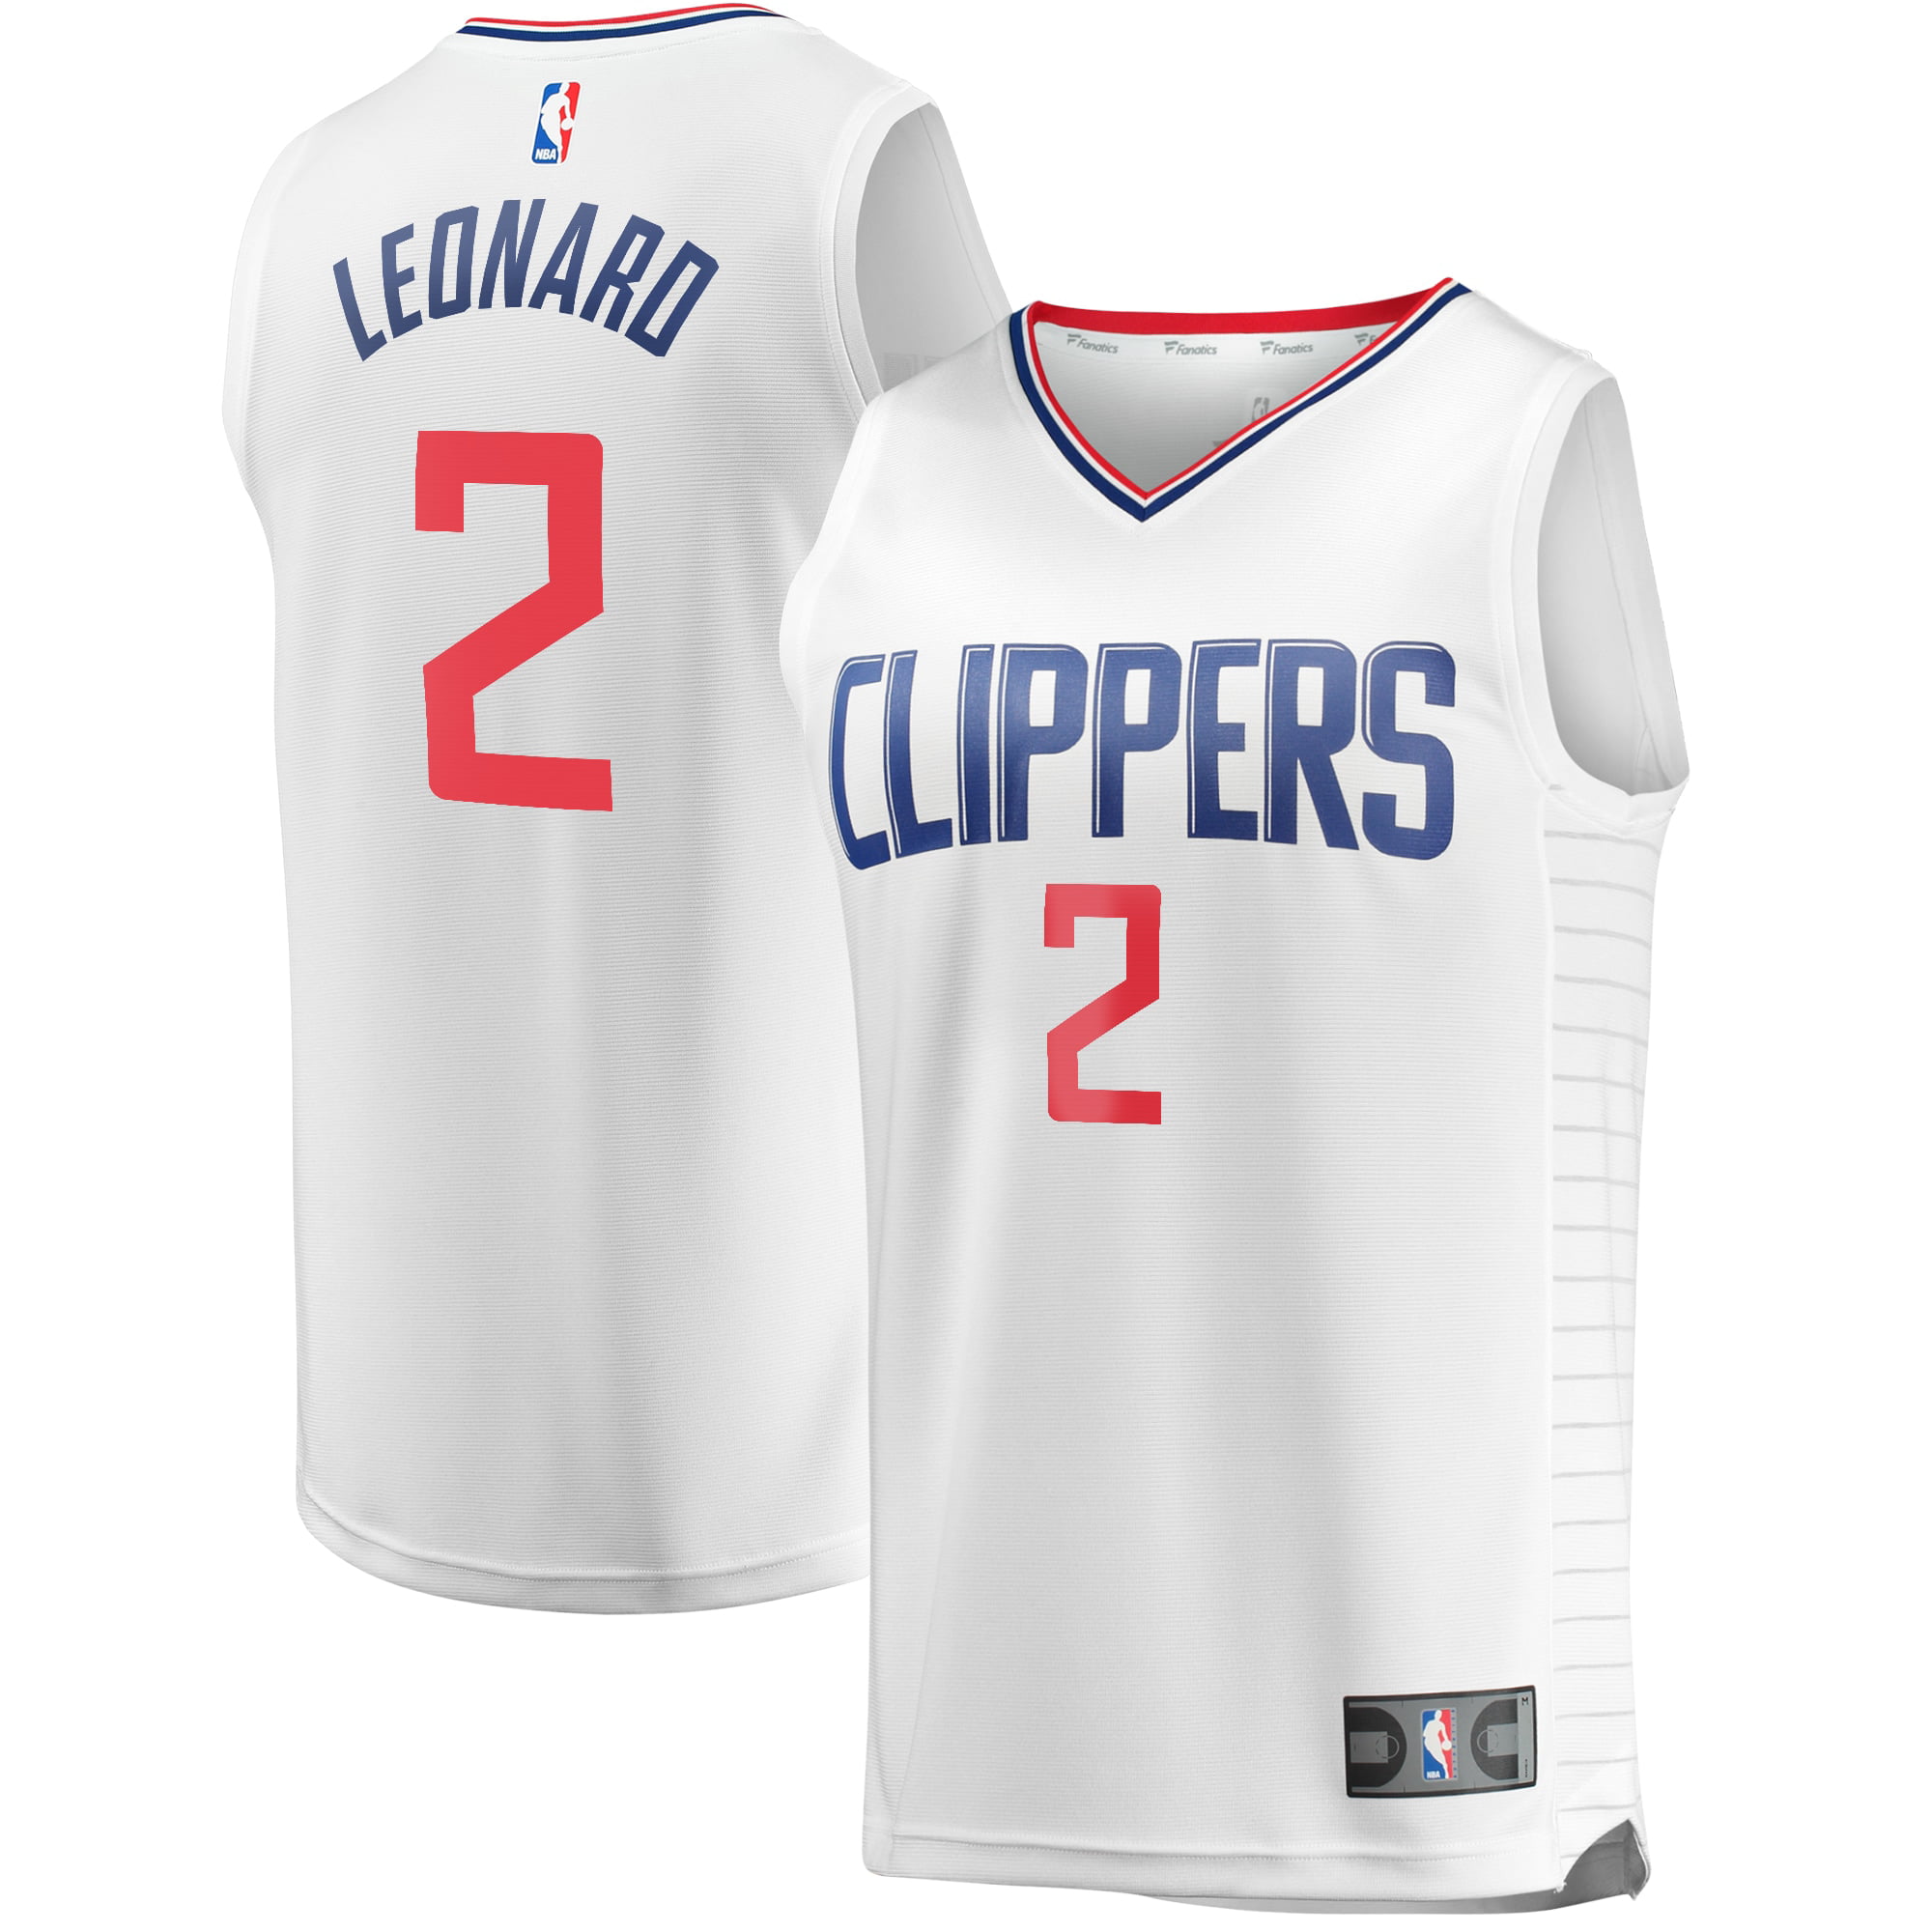 clippers leonard jersey